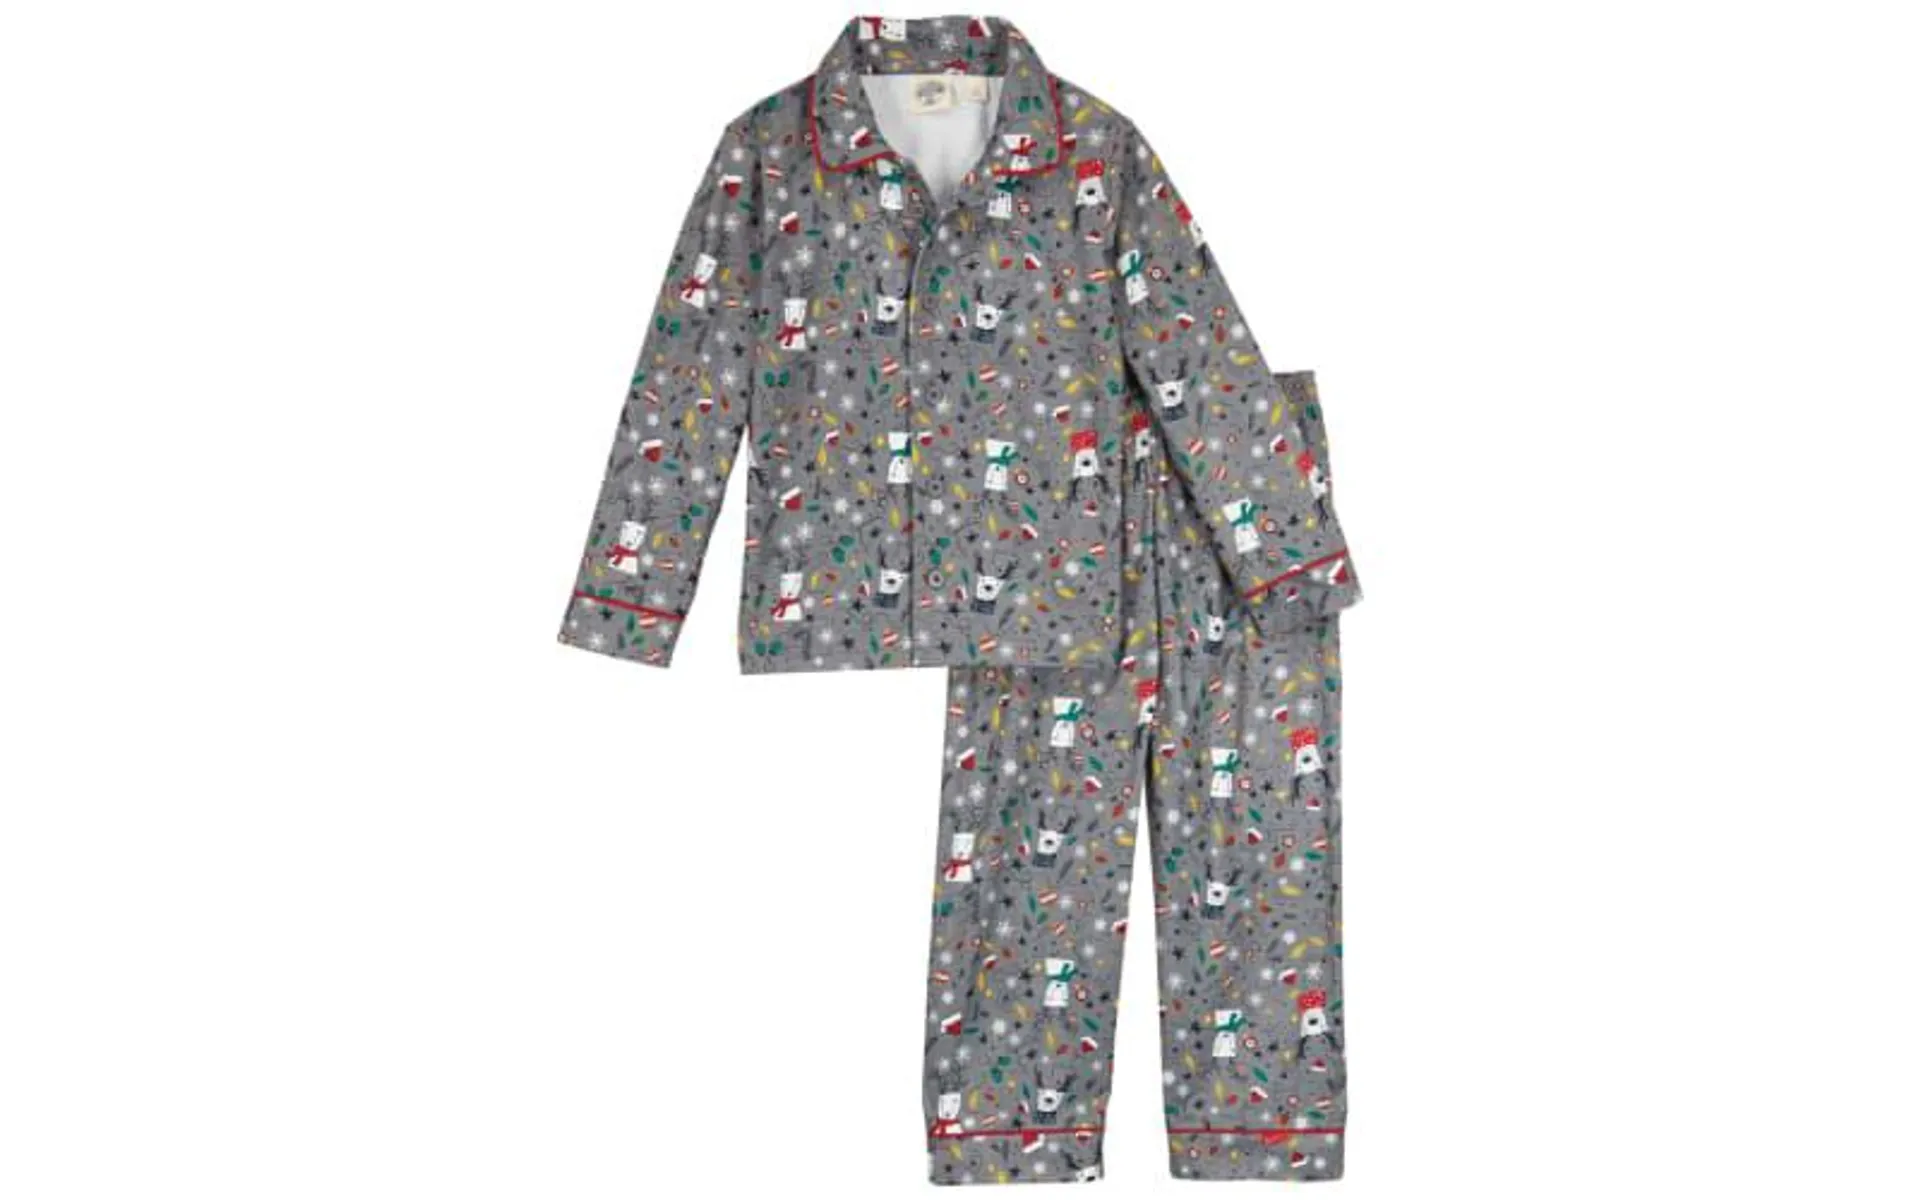 Outdoor Kids Holiday Reindeer Long-Sleeve Pajamas Set for Babies, Toddlers, or Kids